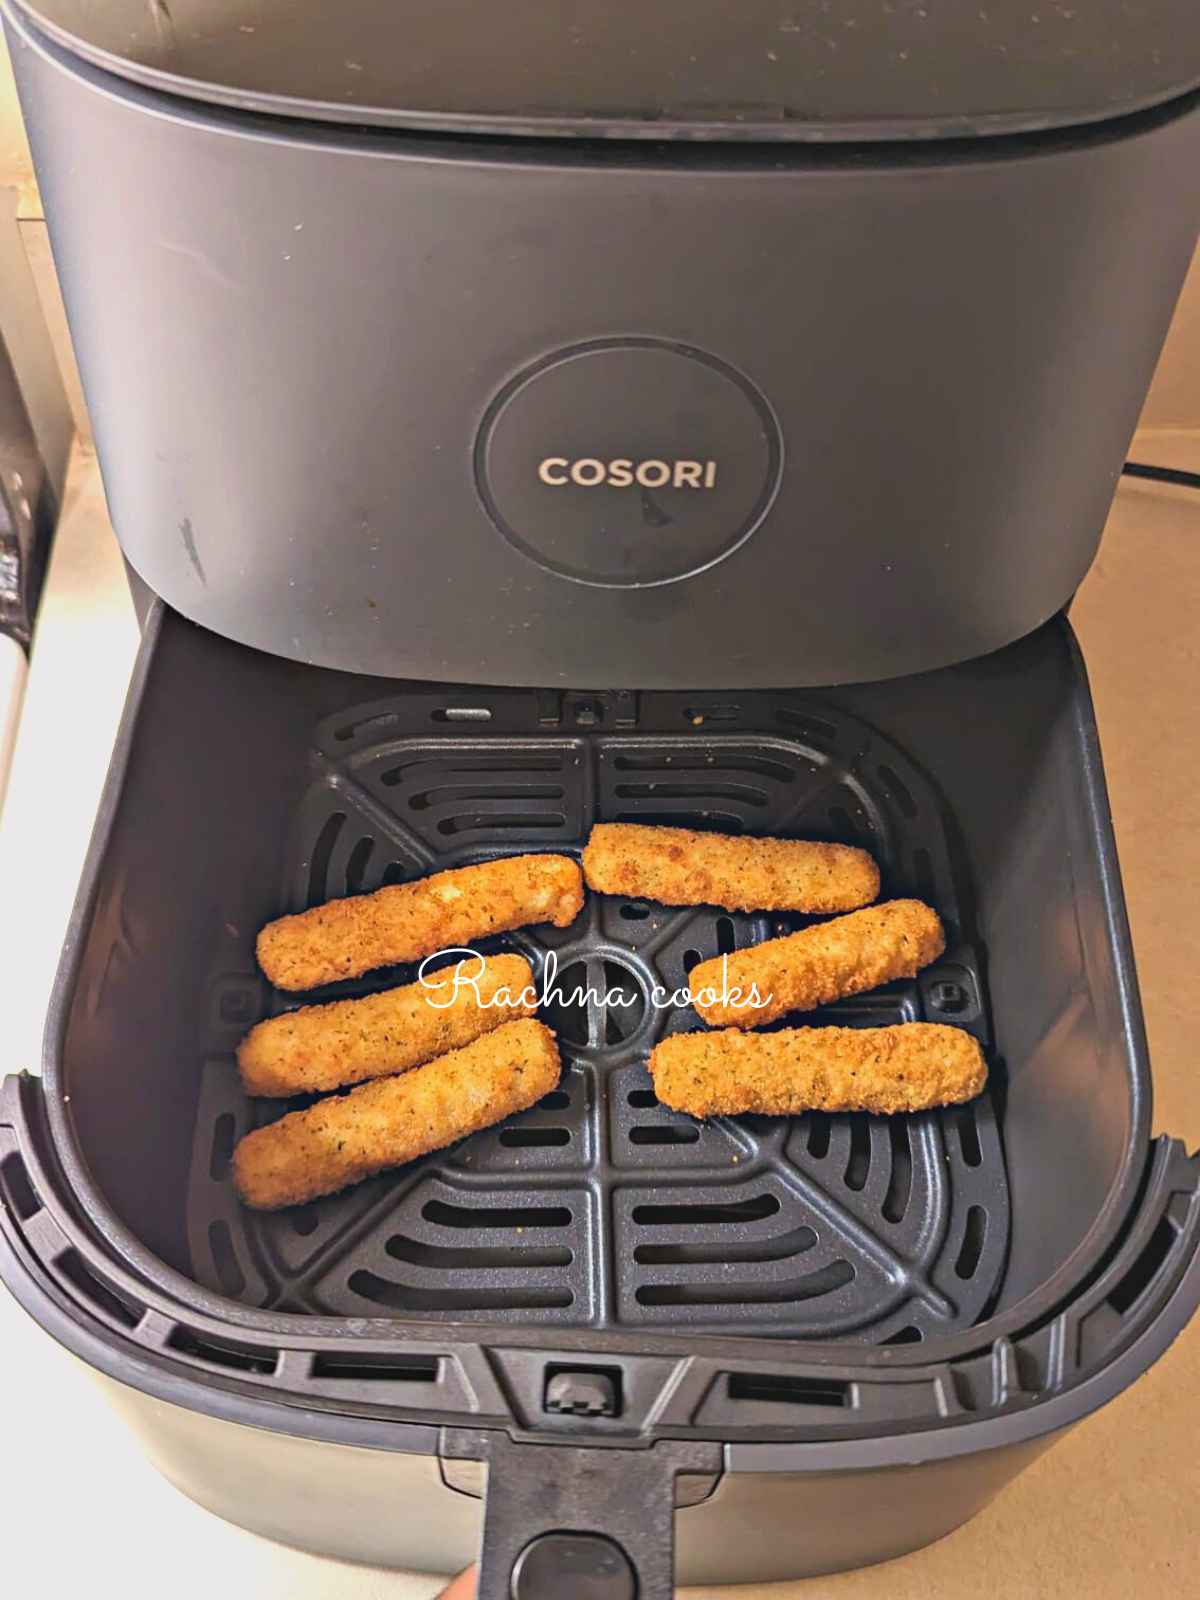 Mozzarella sticks after air frying in Cosori air fryer.